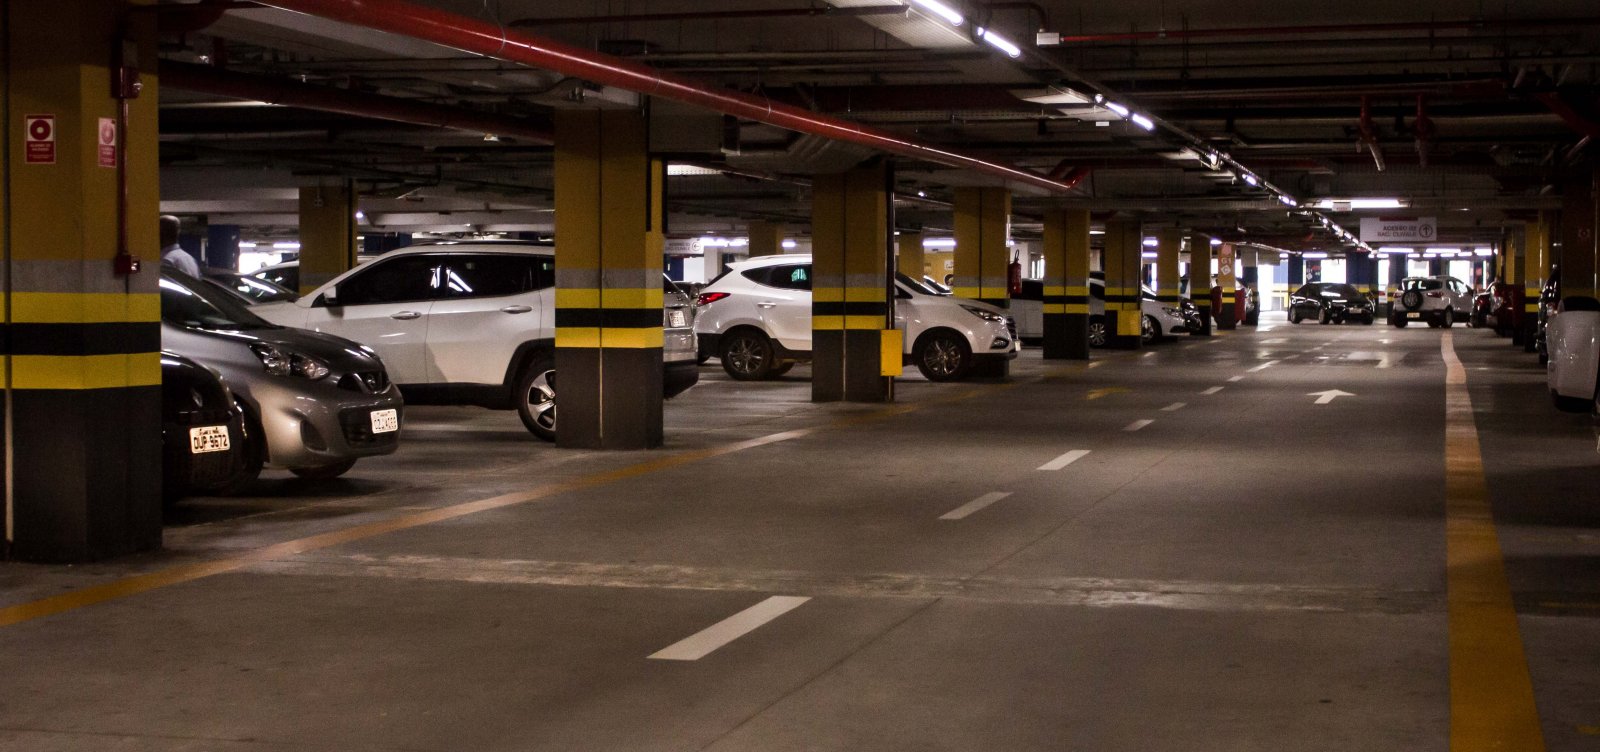 Publicada lei que determina vagas de estacionamento exclusivas para advocacia